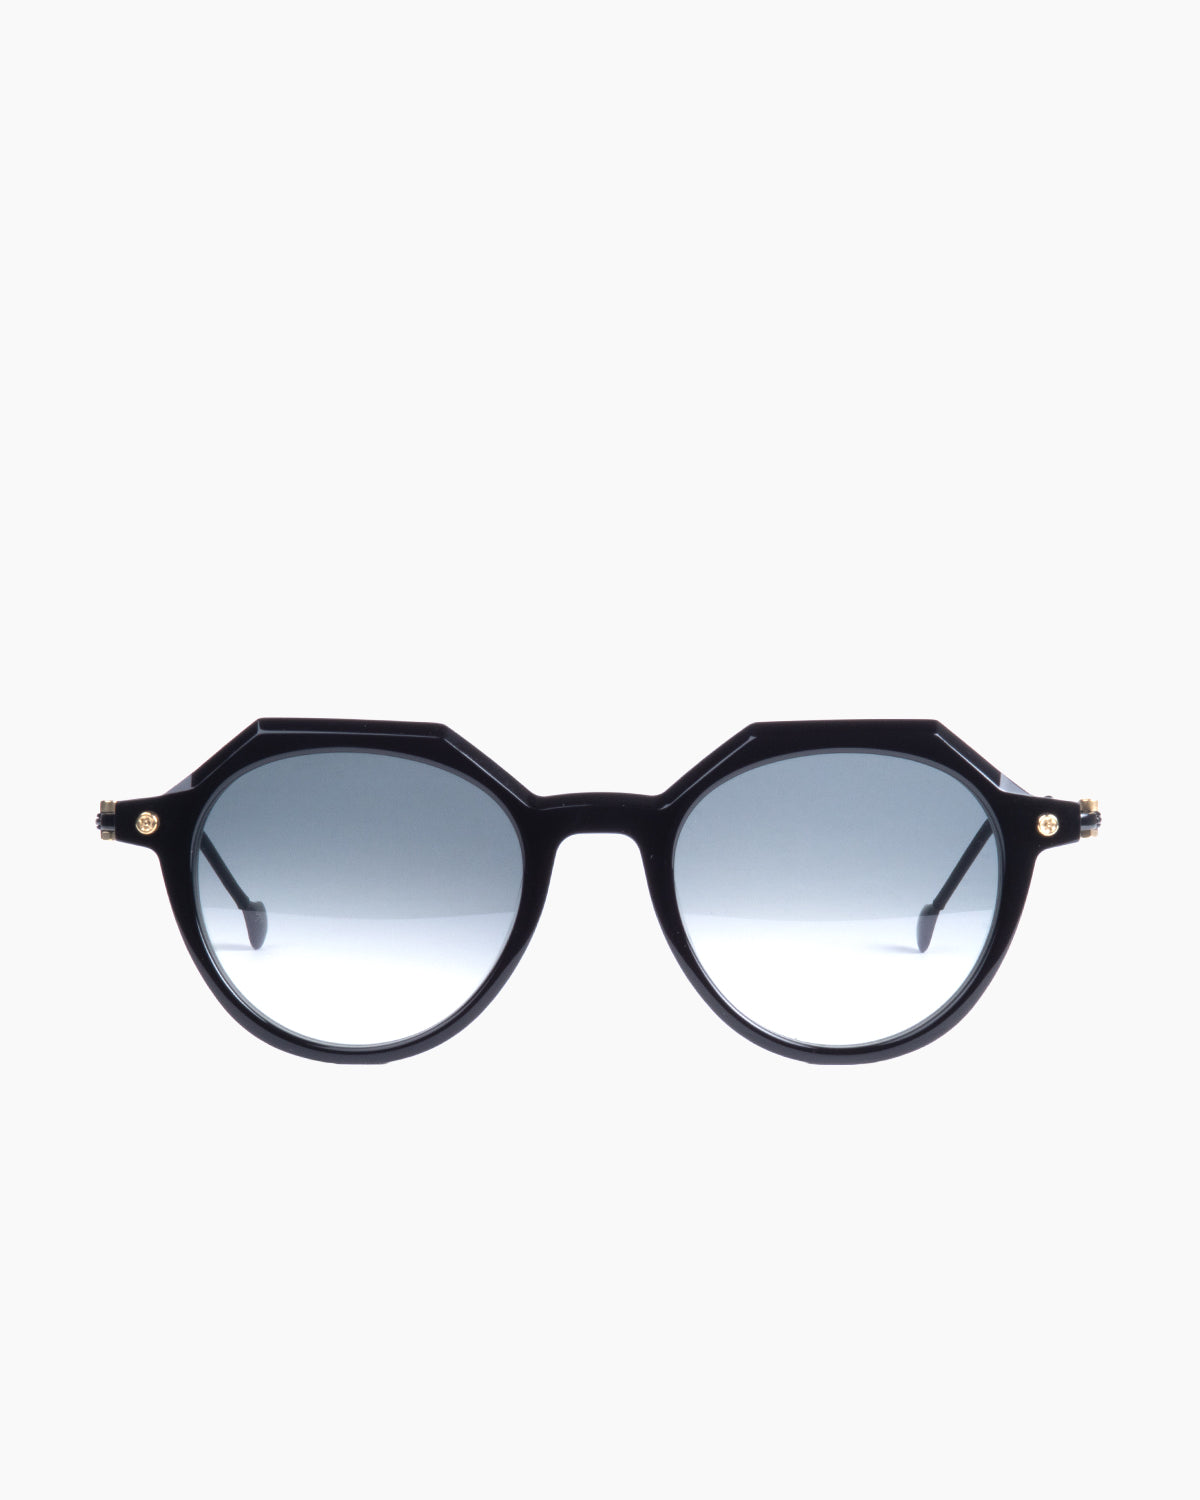 Yohji Yamamoto - Slook009 - M001 | glasses bar:  Marie-Sophie Dion